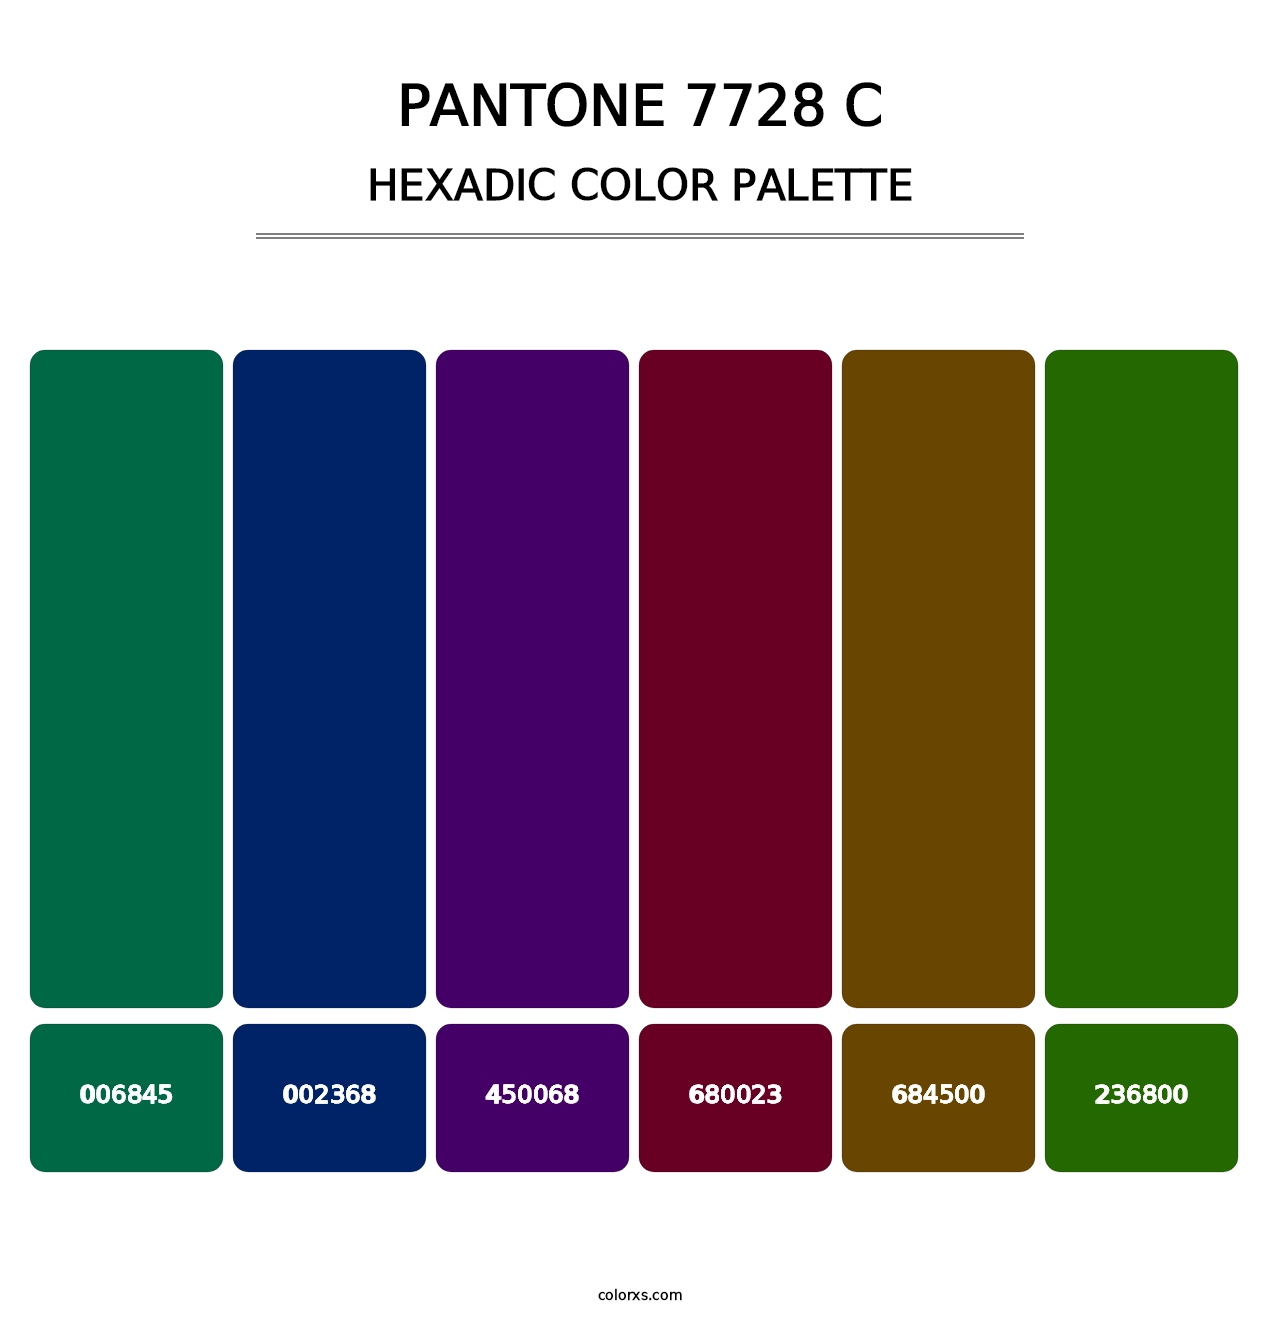 PANTONE 7728 C - Hexadic Color Palette